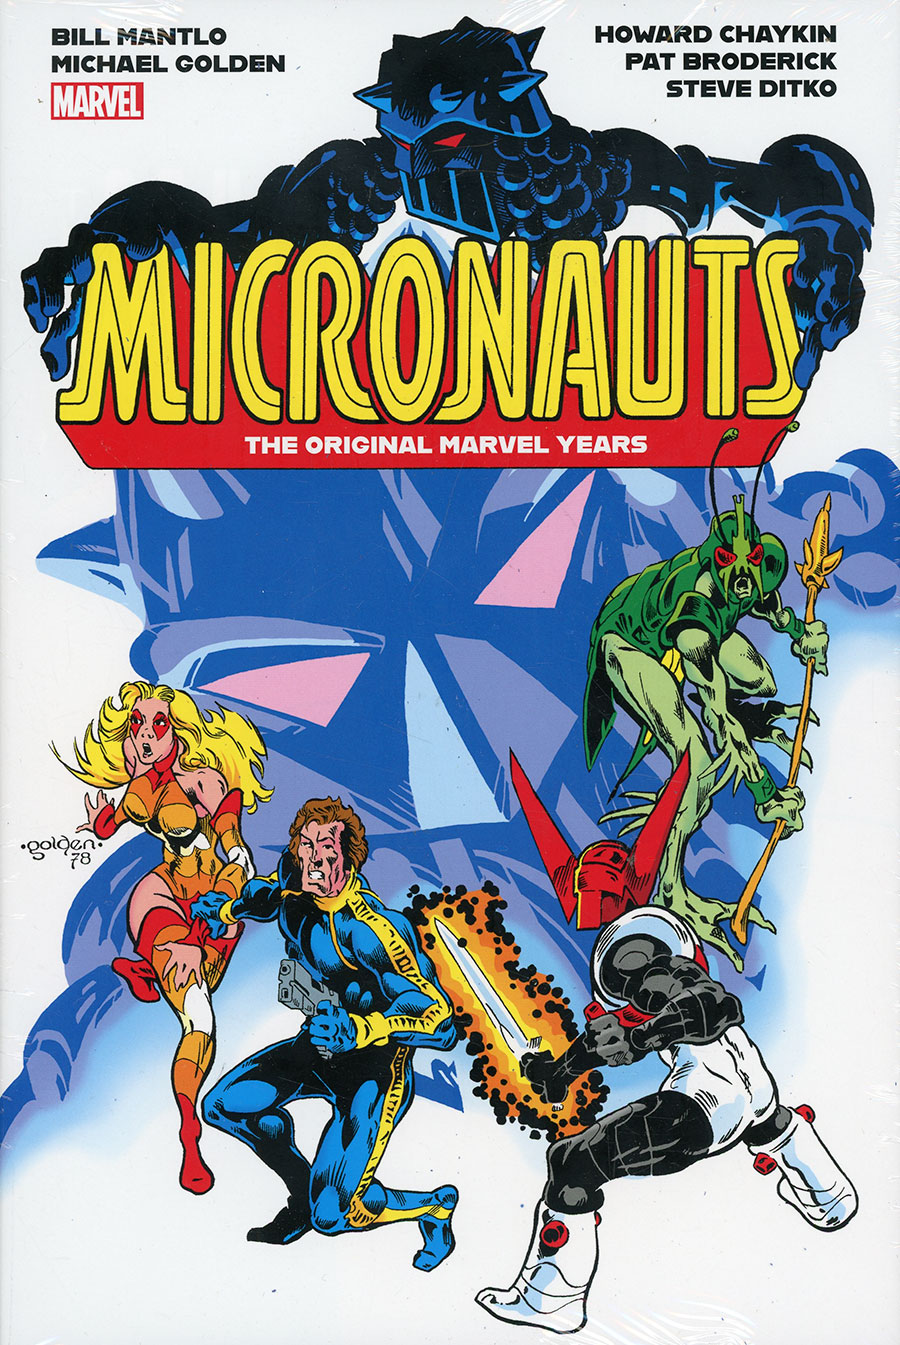 Micronauts Original Marvel Years Omnibus Vol 1 HC Direct Market Michael Golden Variant Cover